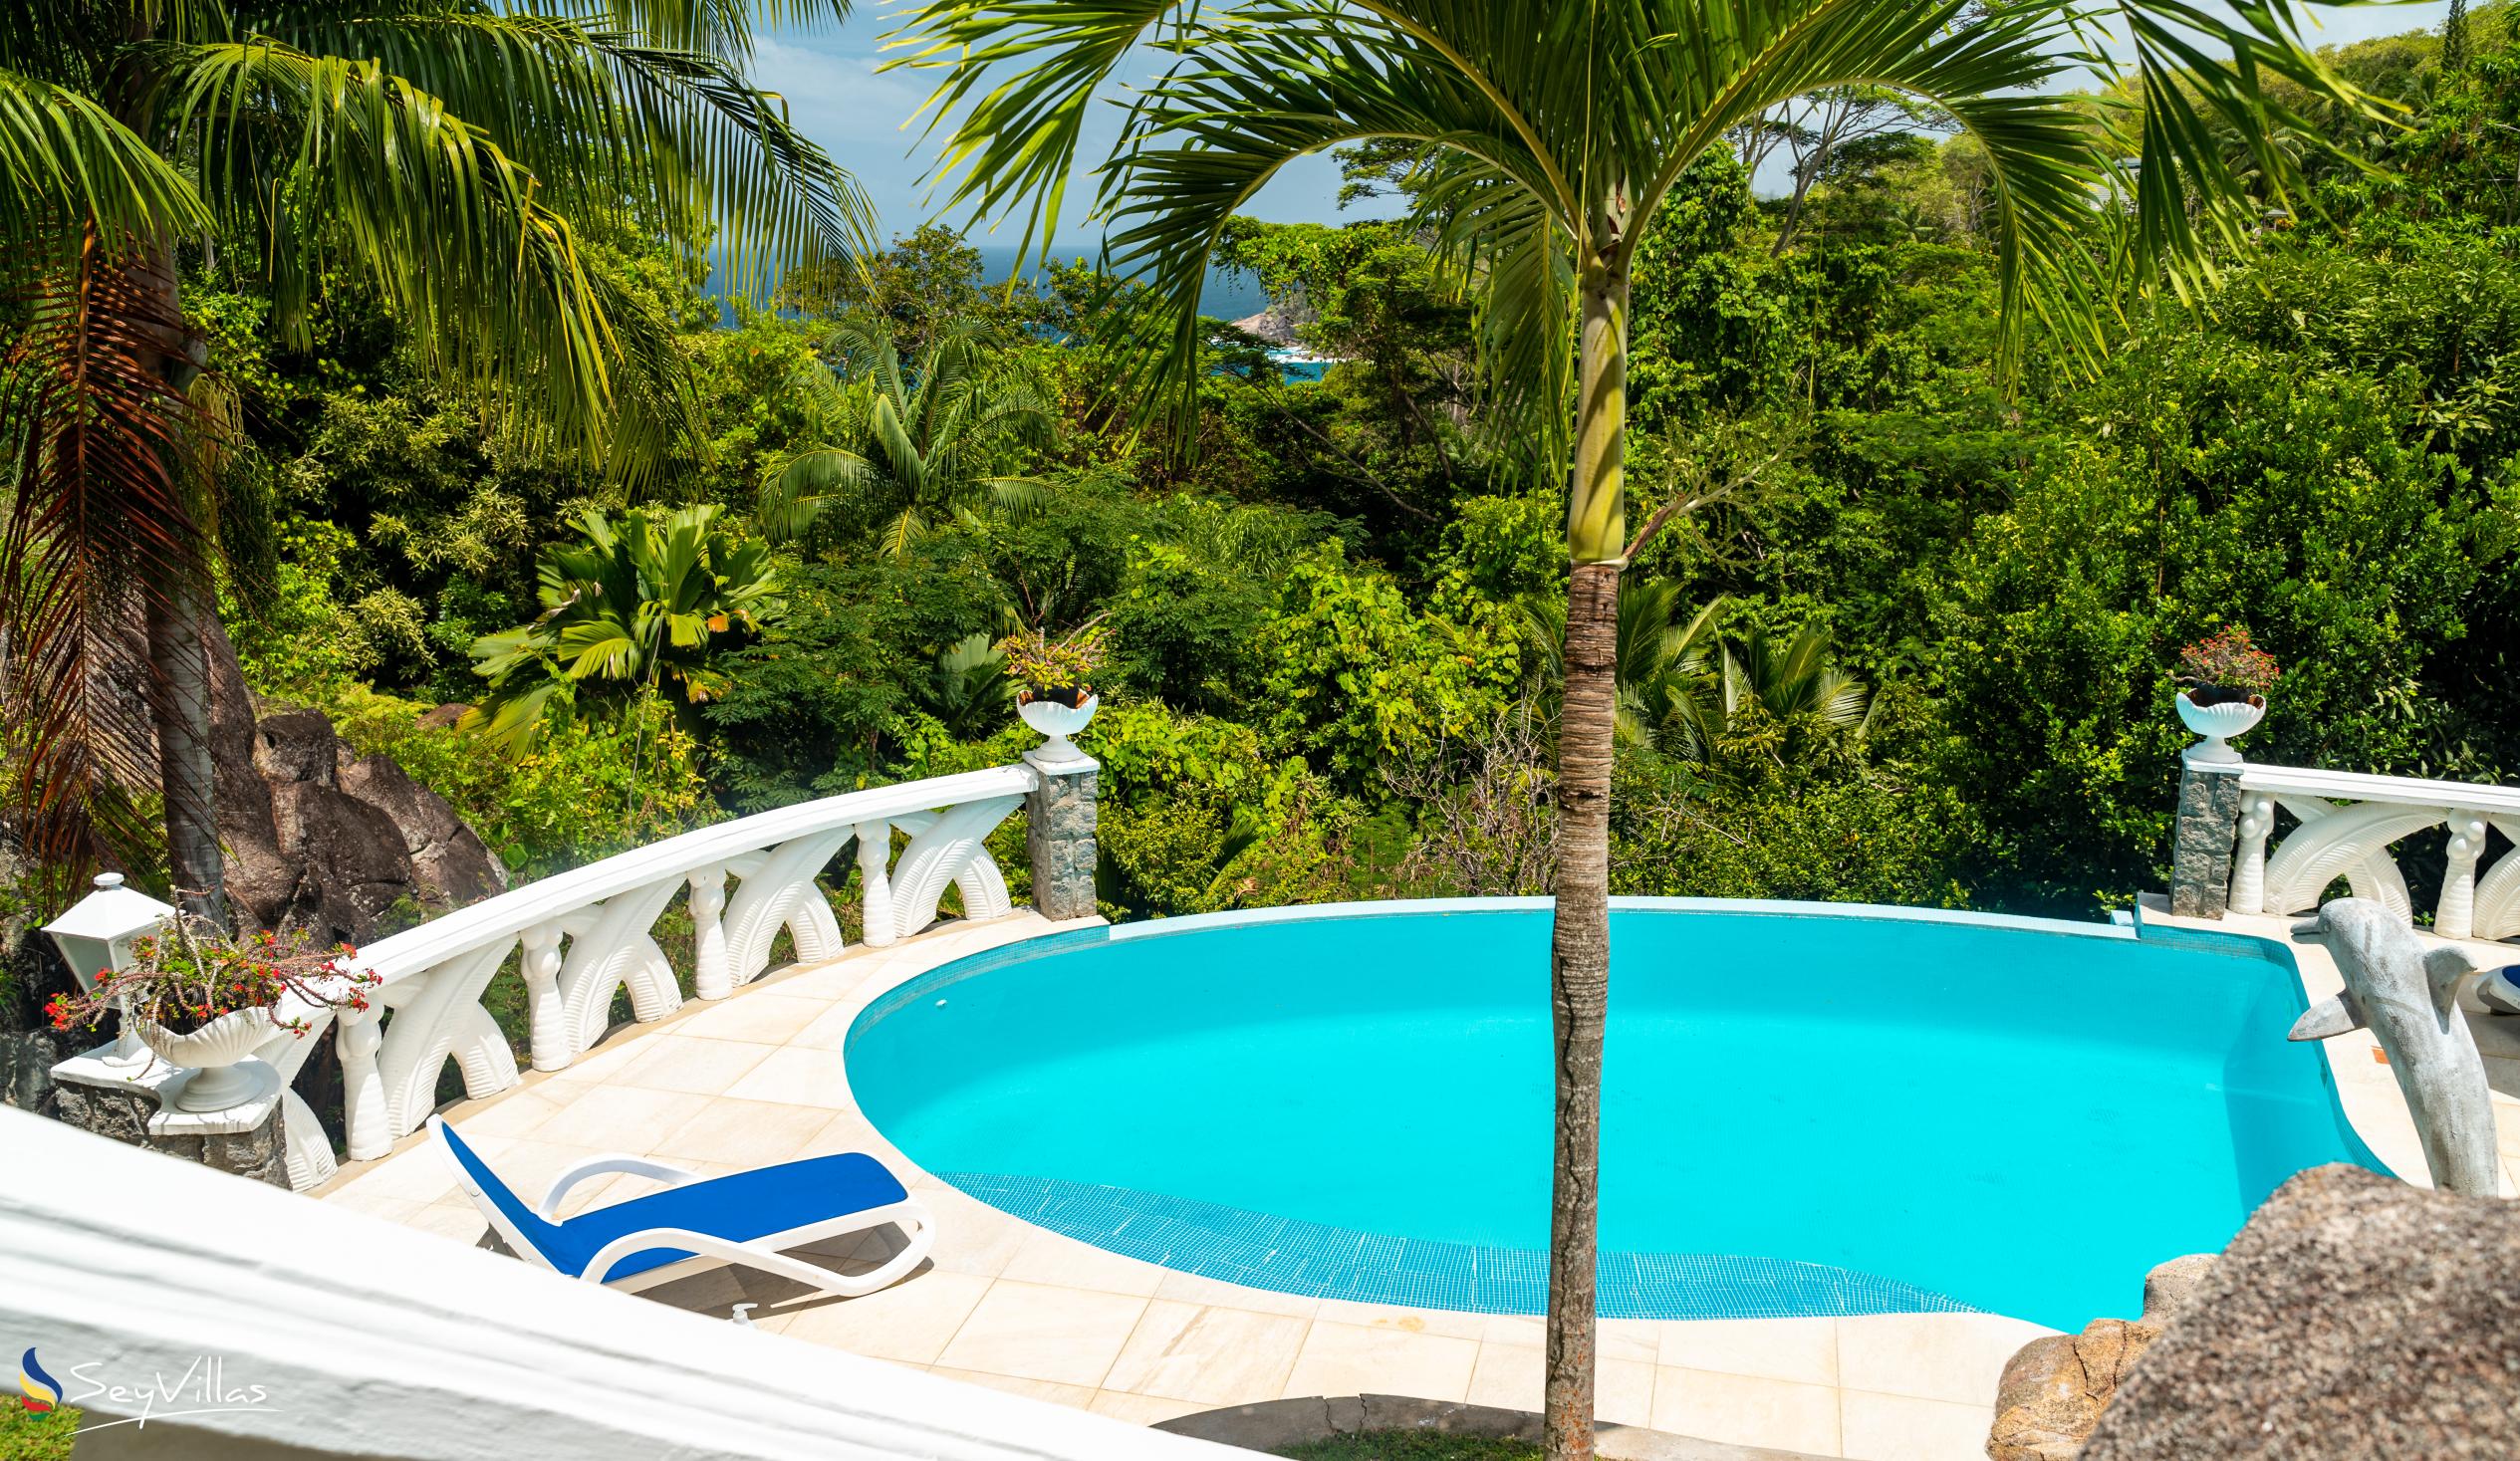 Foto 13: Villa Gazebo - Aussenbereich - Mahé (Seychellen)